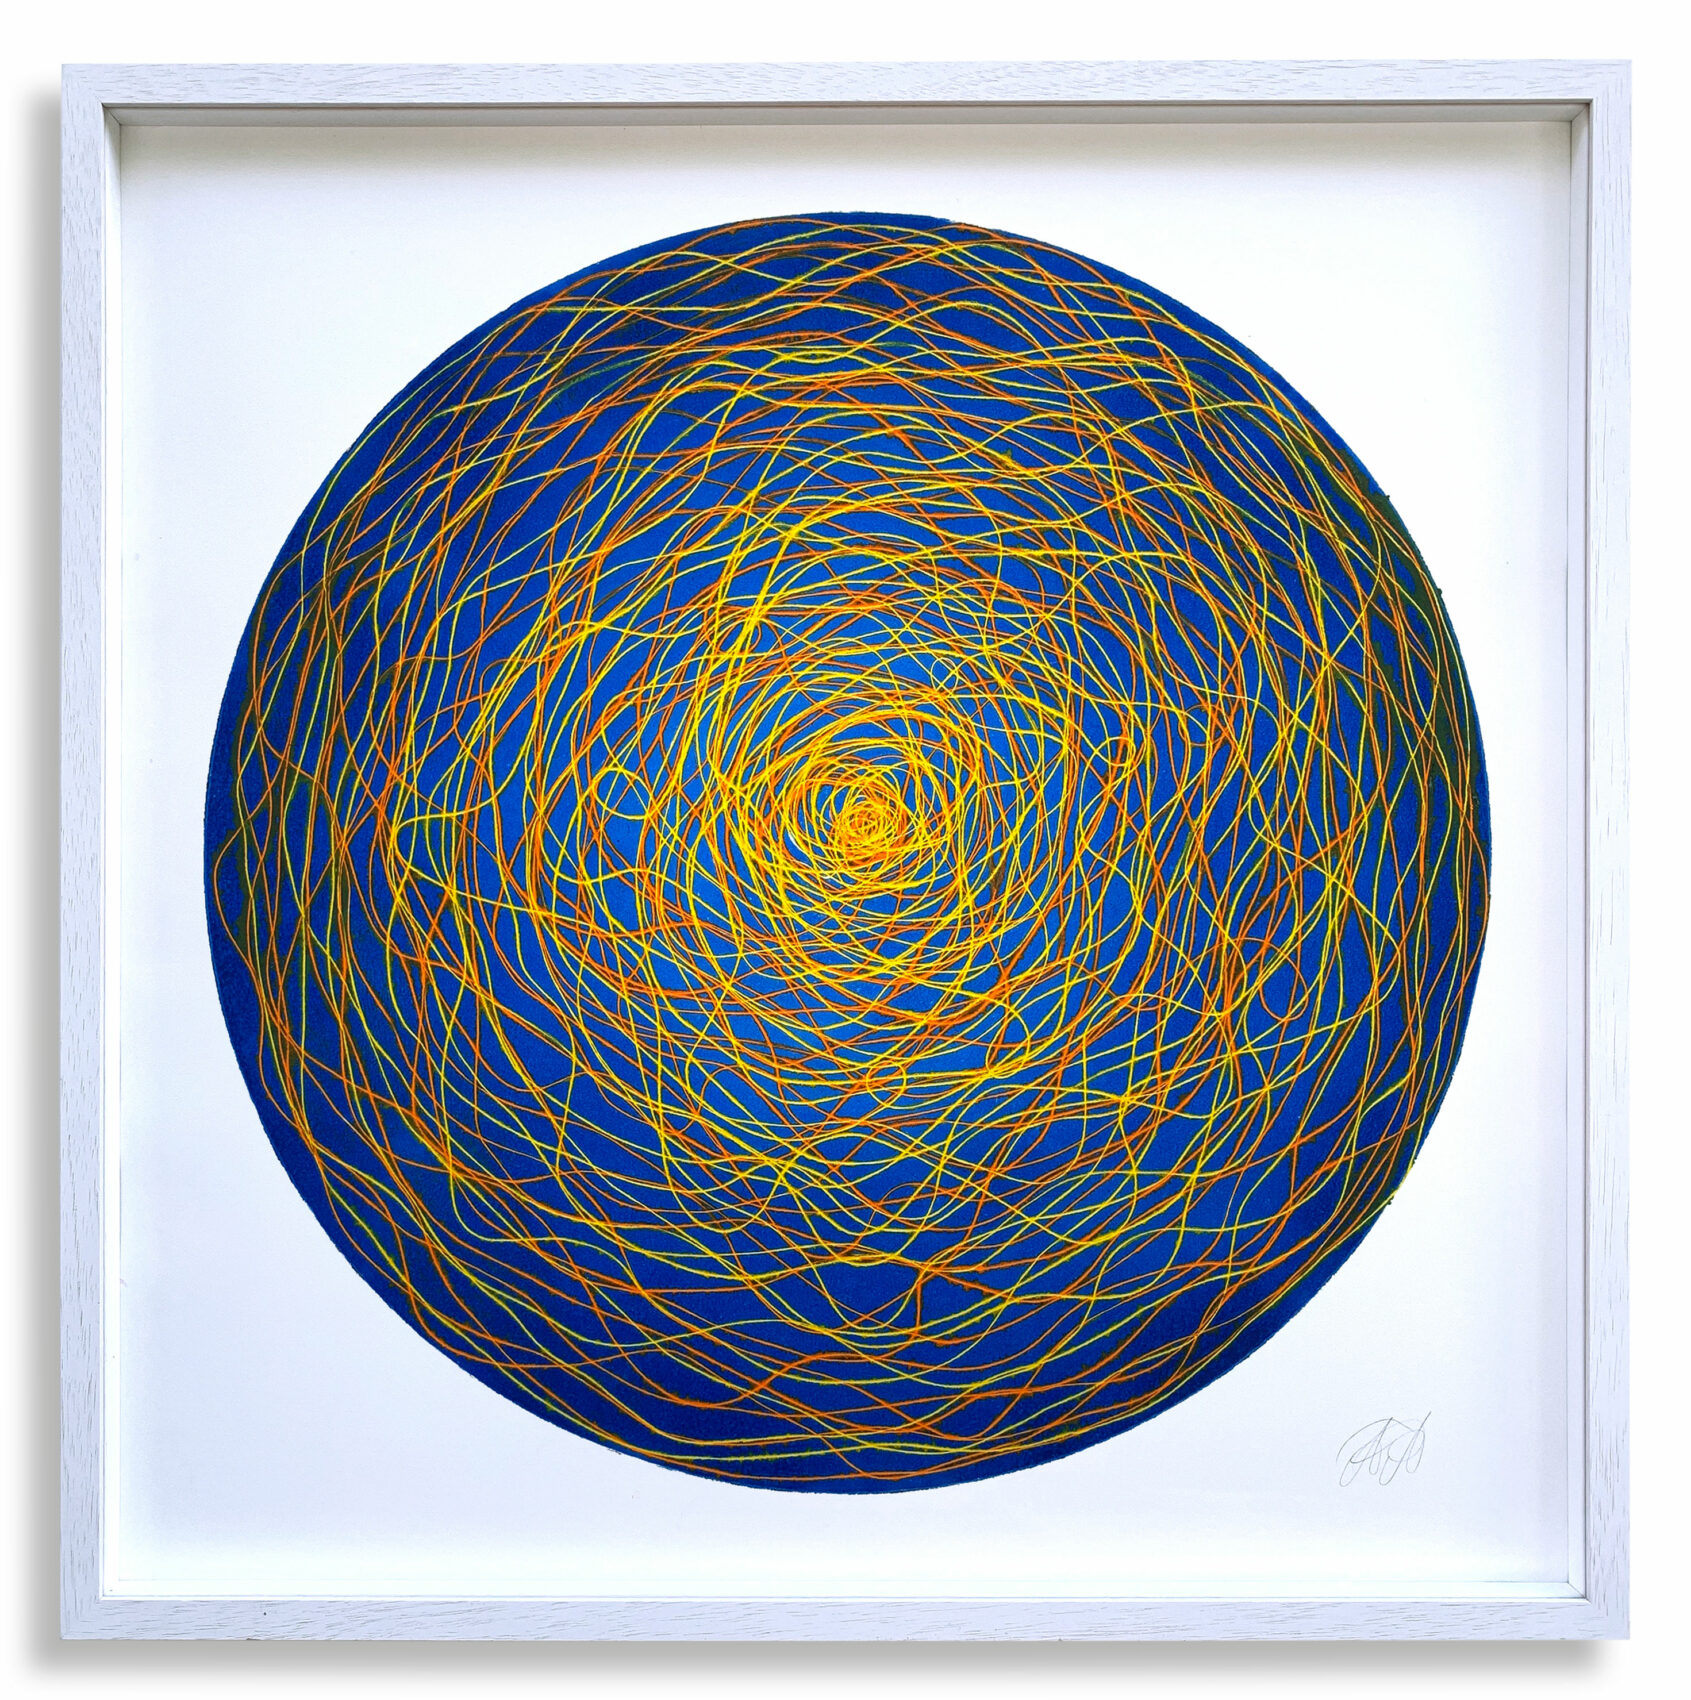 6_Alexander-Arundell_Dreipunkt-Edition_Wild-Circle-Yellow-and-Orange-on-Blue_70-x-70-cm_Material-Print_600-EUR-framed